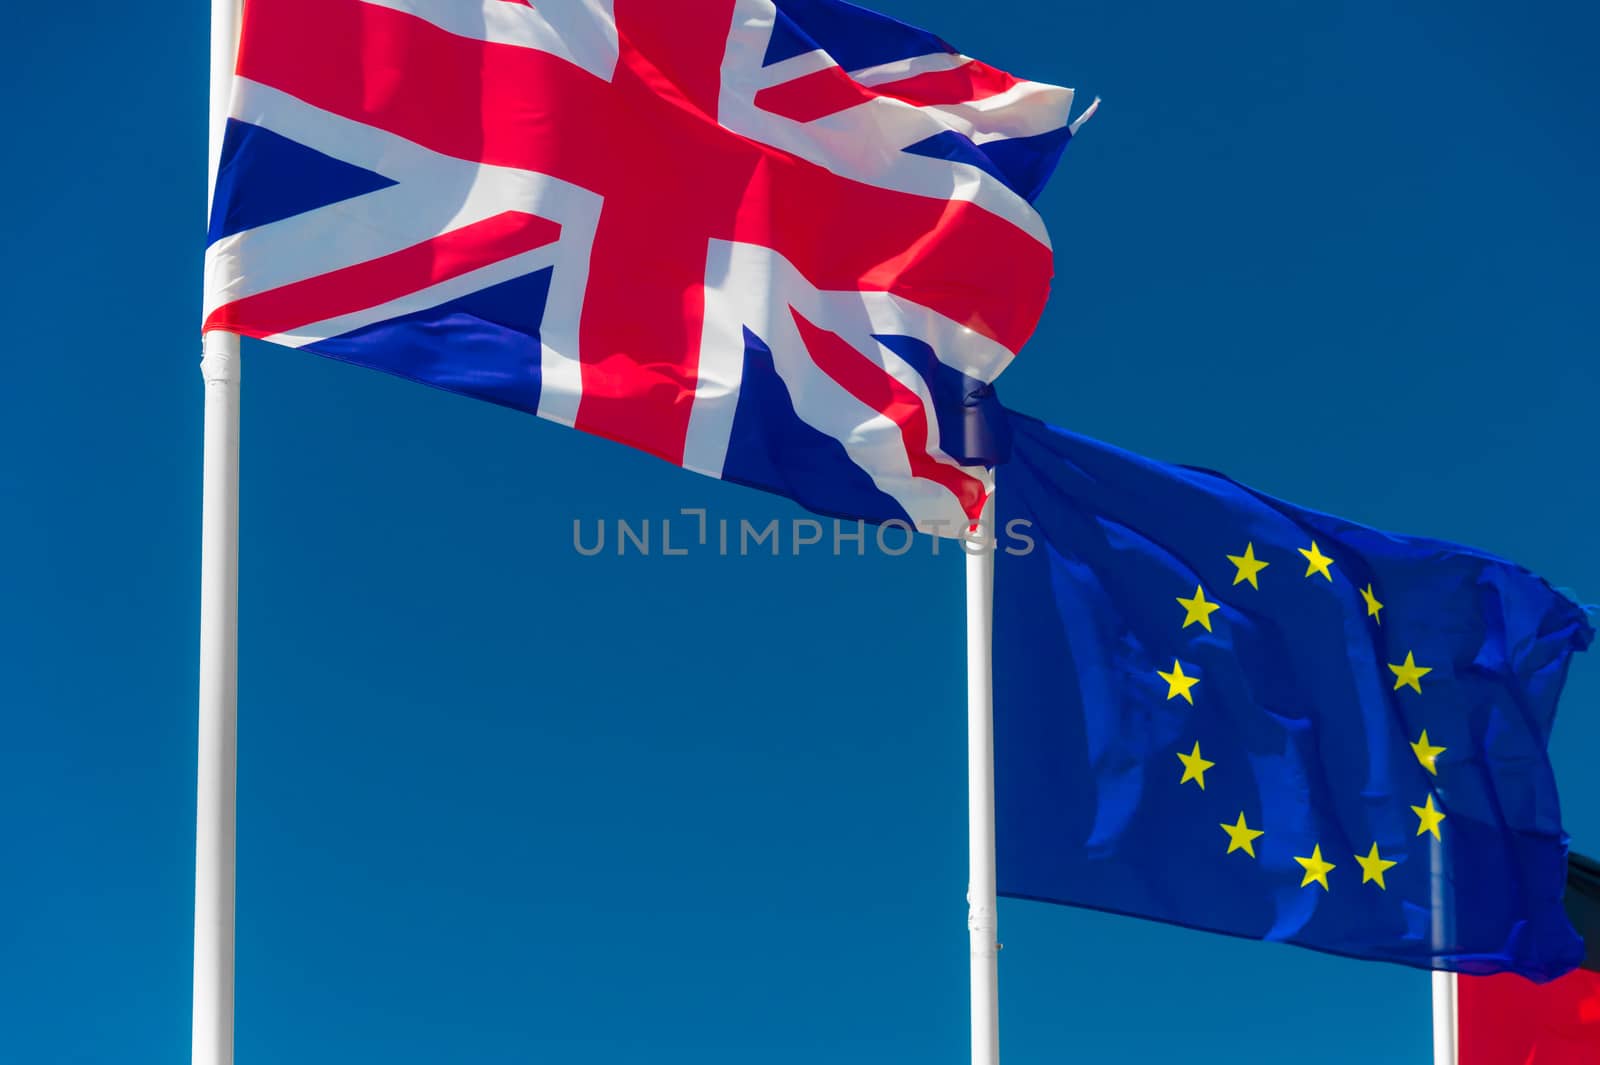 British flag and European flag waving against blue sky in Wimereux, France.